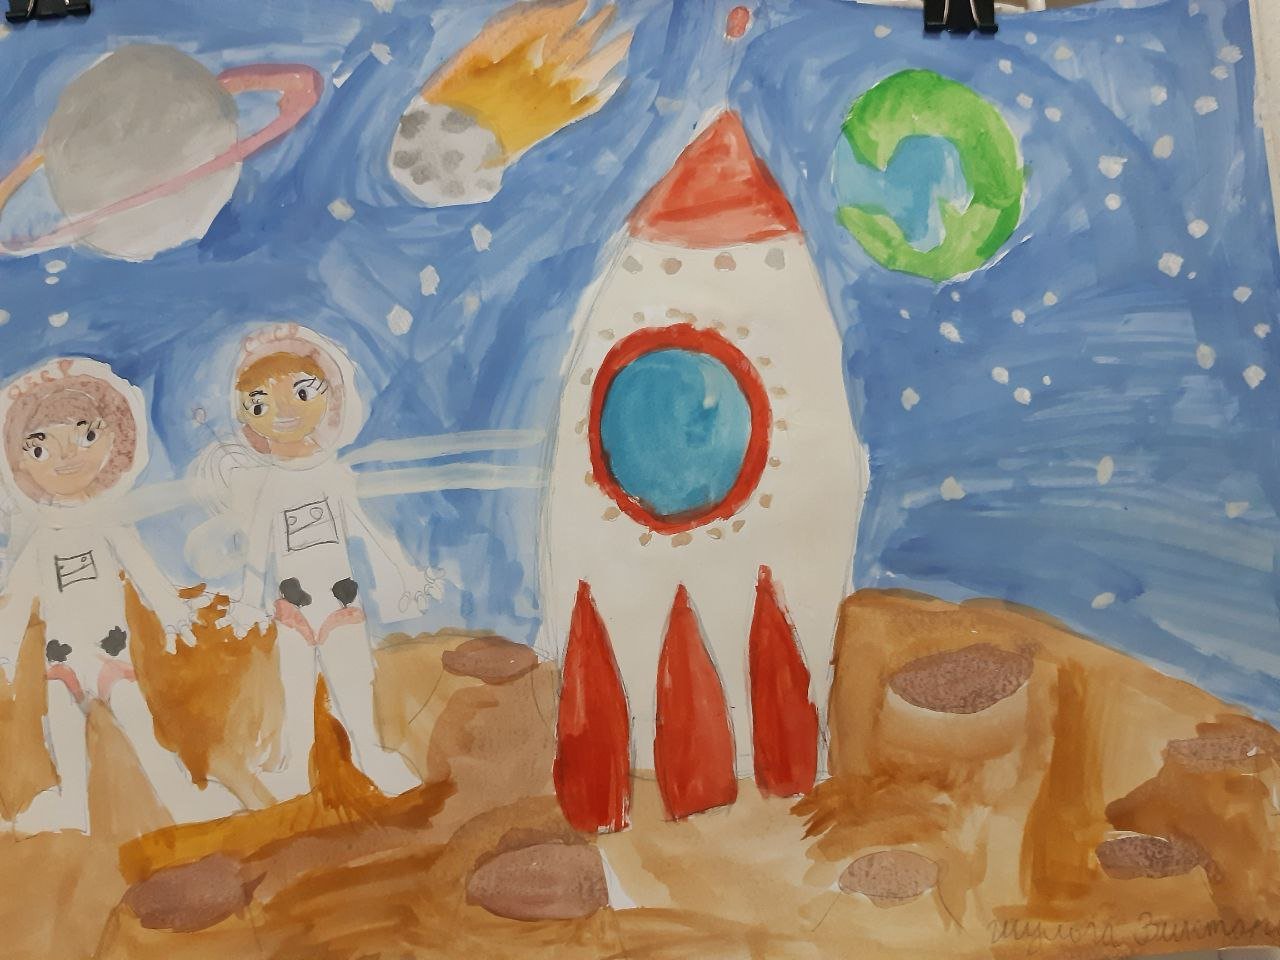 Включи день космонавтиков. Рисунок на день космонавтиков. Рисунок на день космонавтики для детей. Освоение космоса рисунок. Нарисовать день космонавтиков.